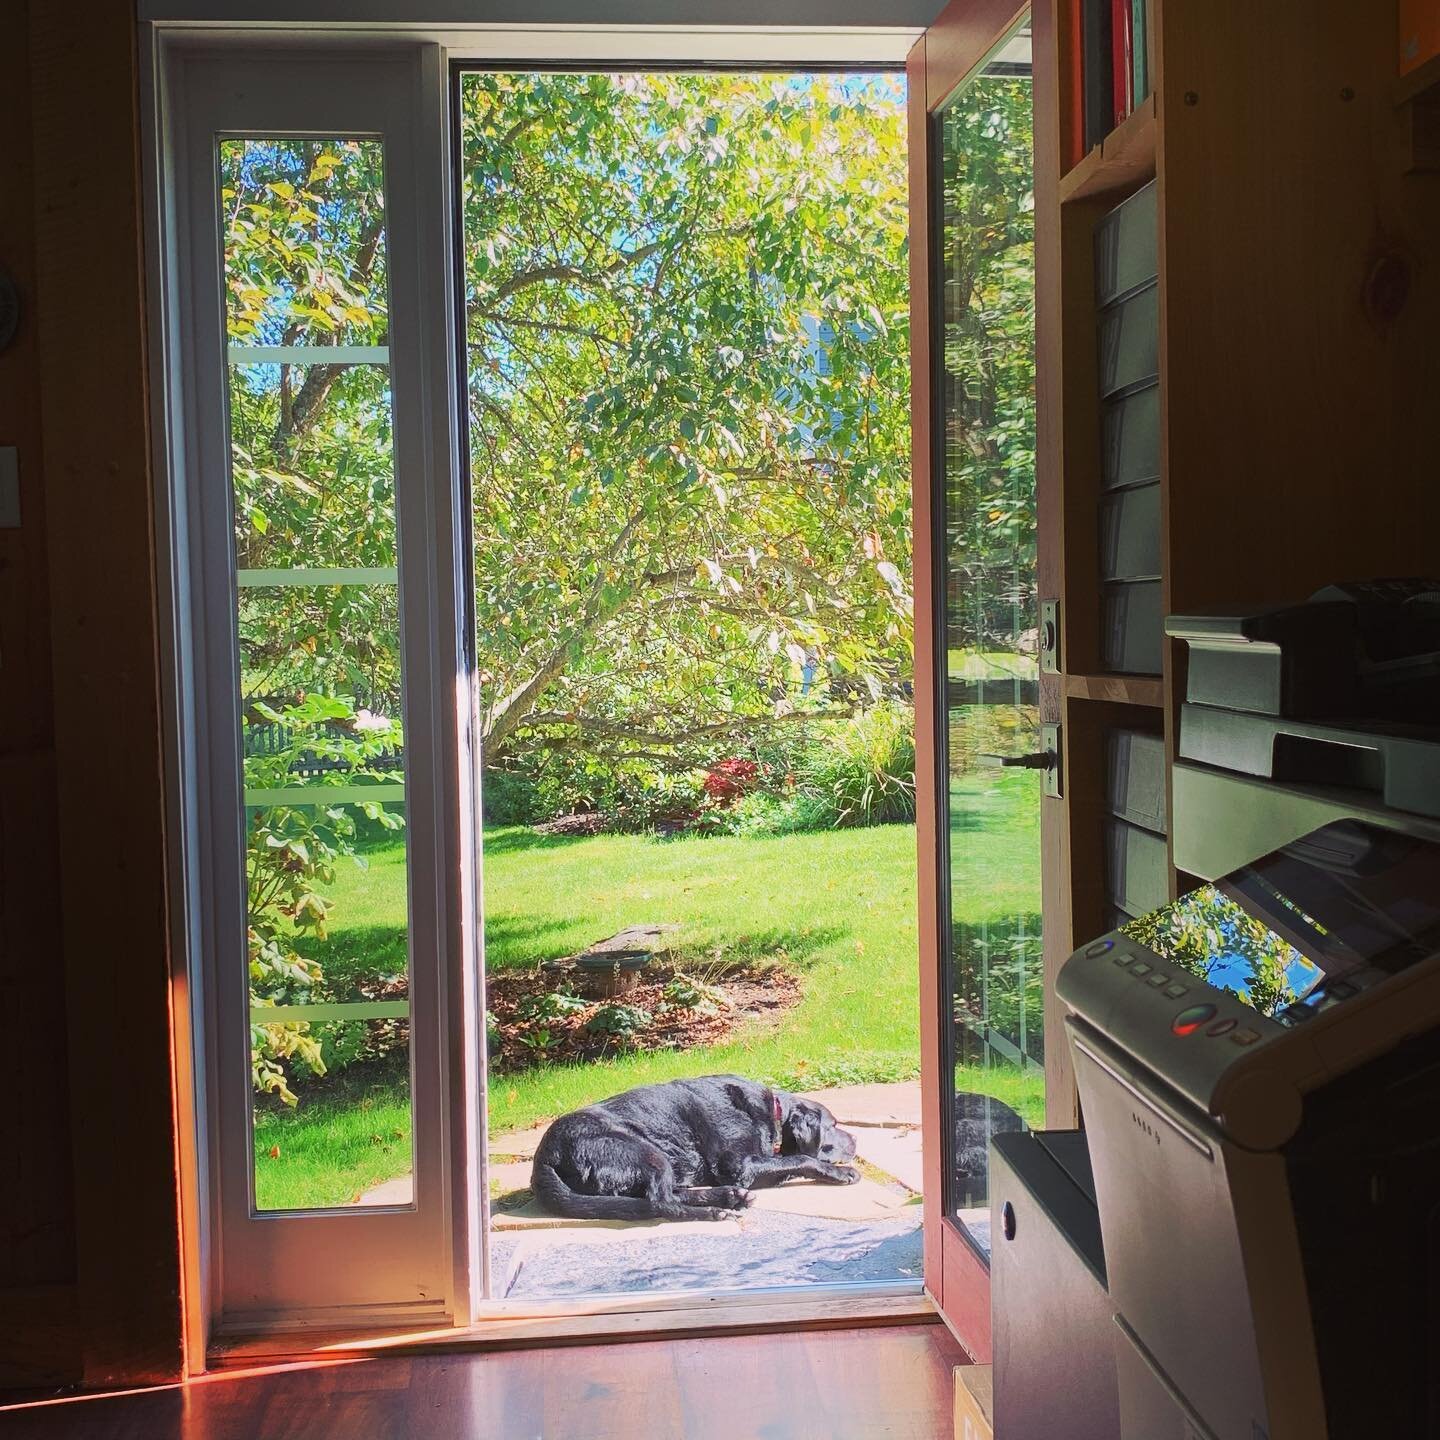 The studio dog always seeks the Sun ☀️